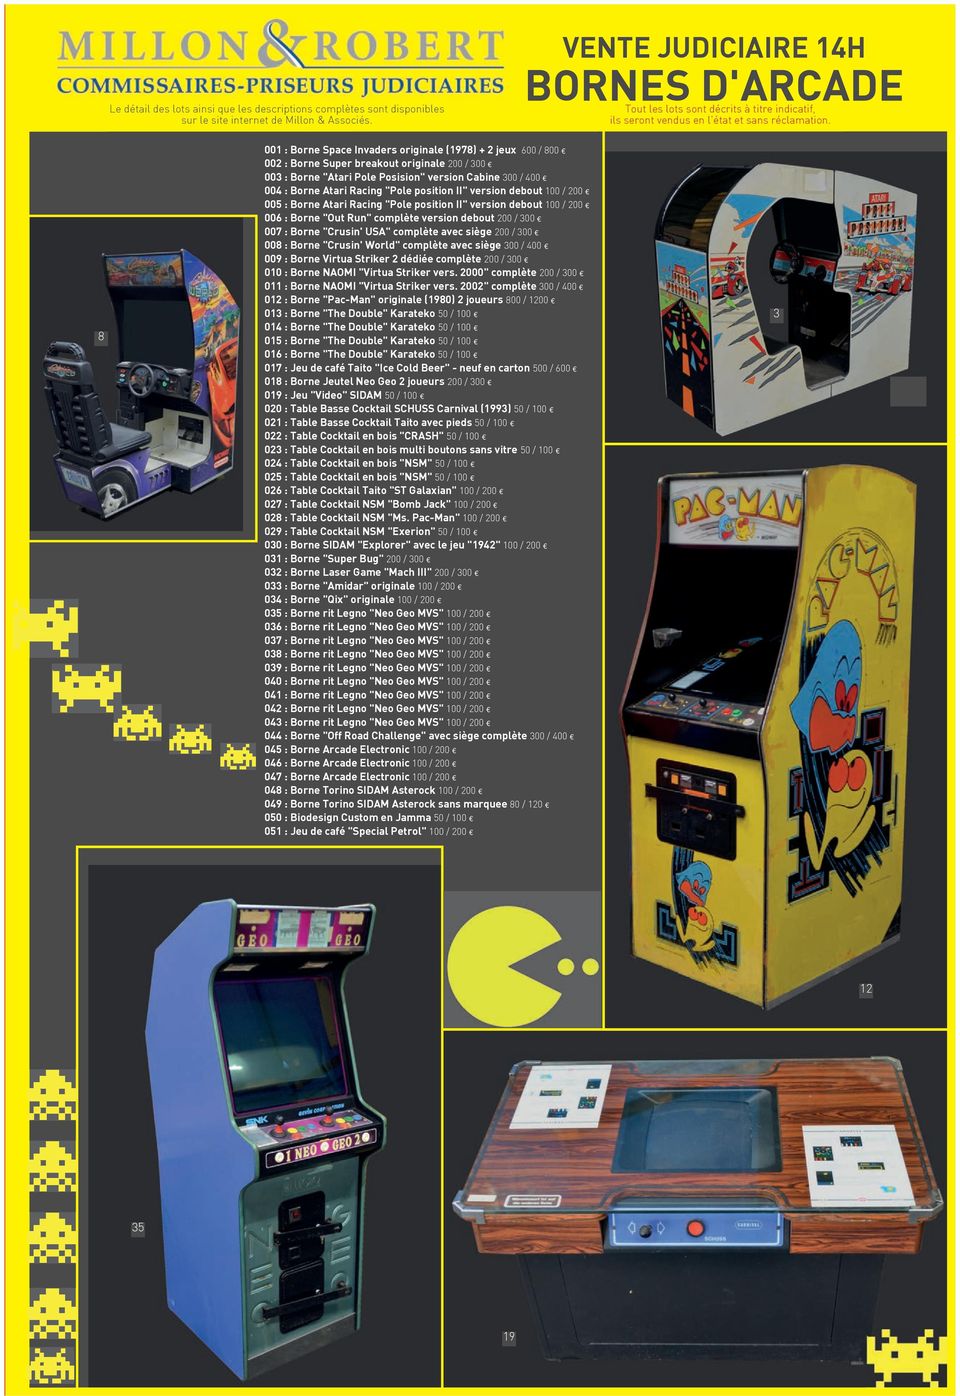 8 001 : Borne Space Invaders originale (1978) + 2 jeux 600 / 800 002 : Borne Super breakout originale 200 / 300 003 : Borne "Atari Pole Posision" version Cabine 300 / 400 004 : Borne Atari Racing